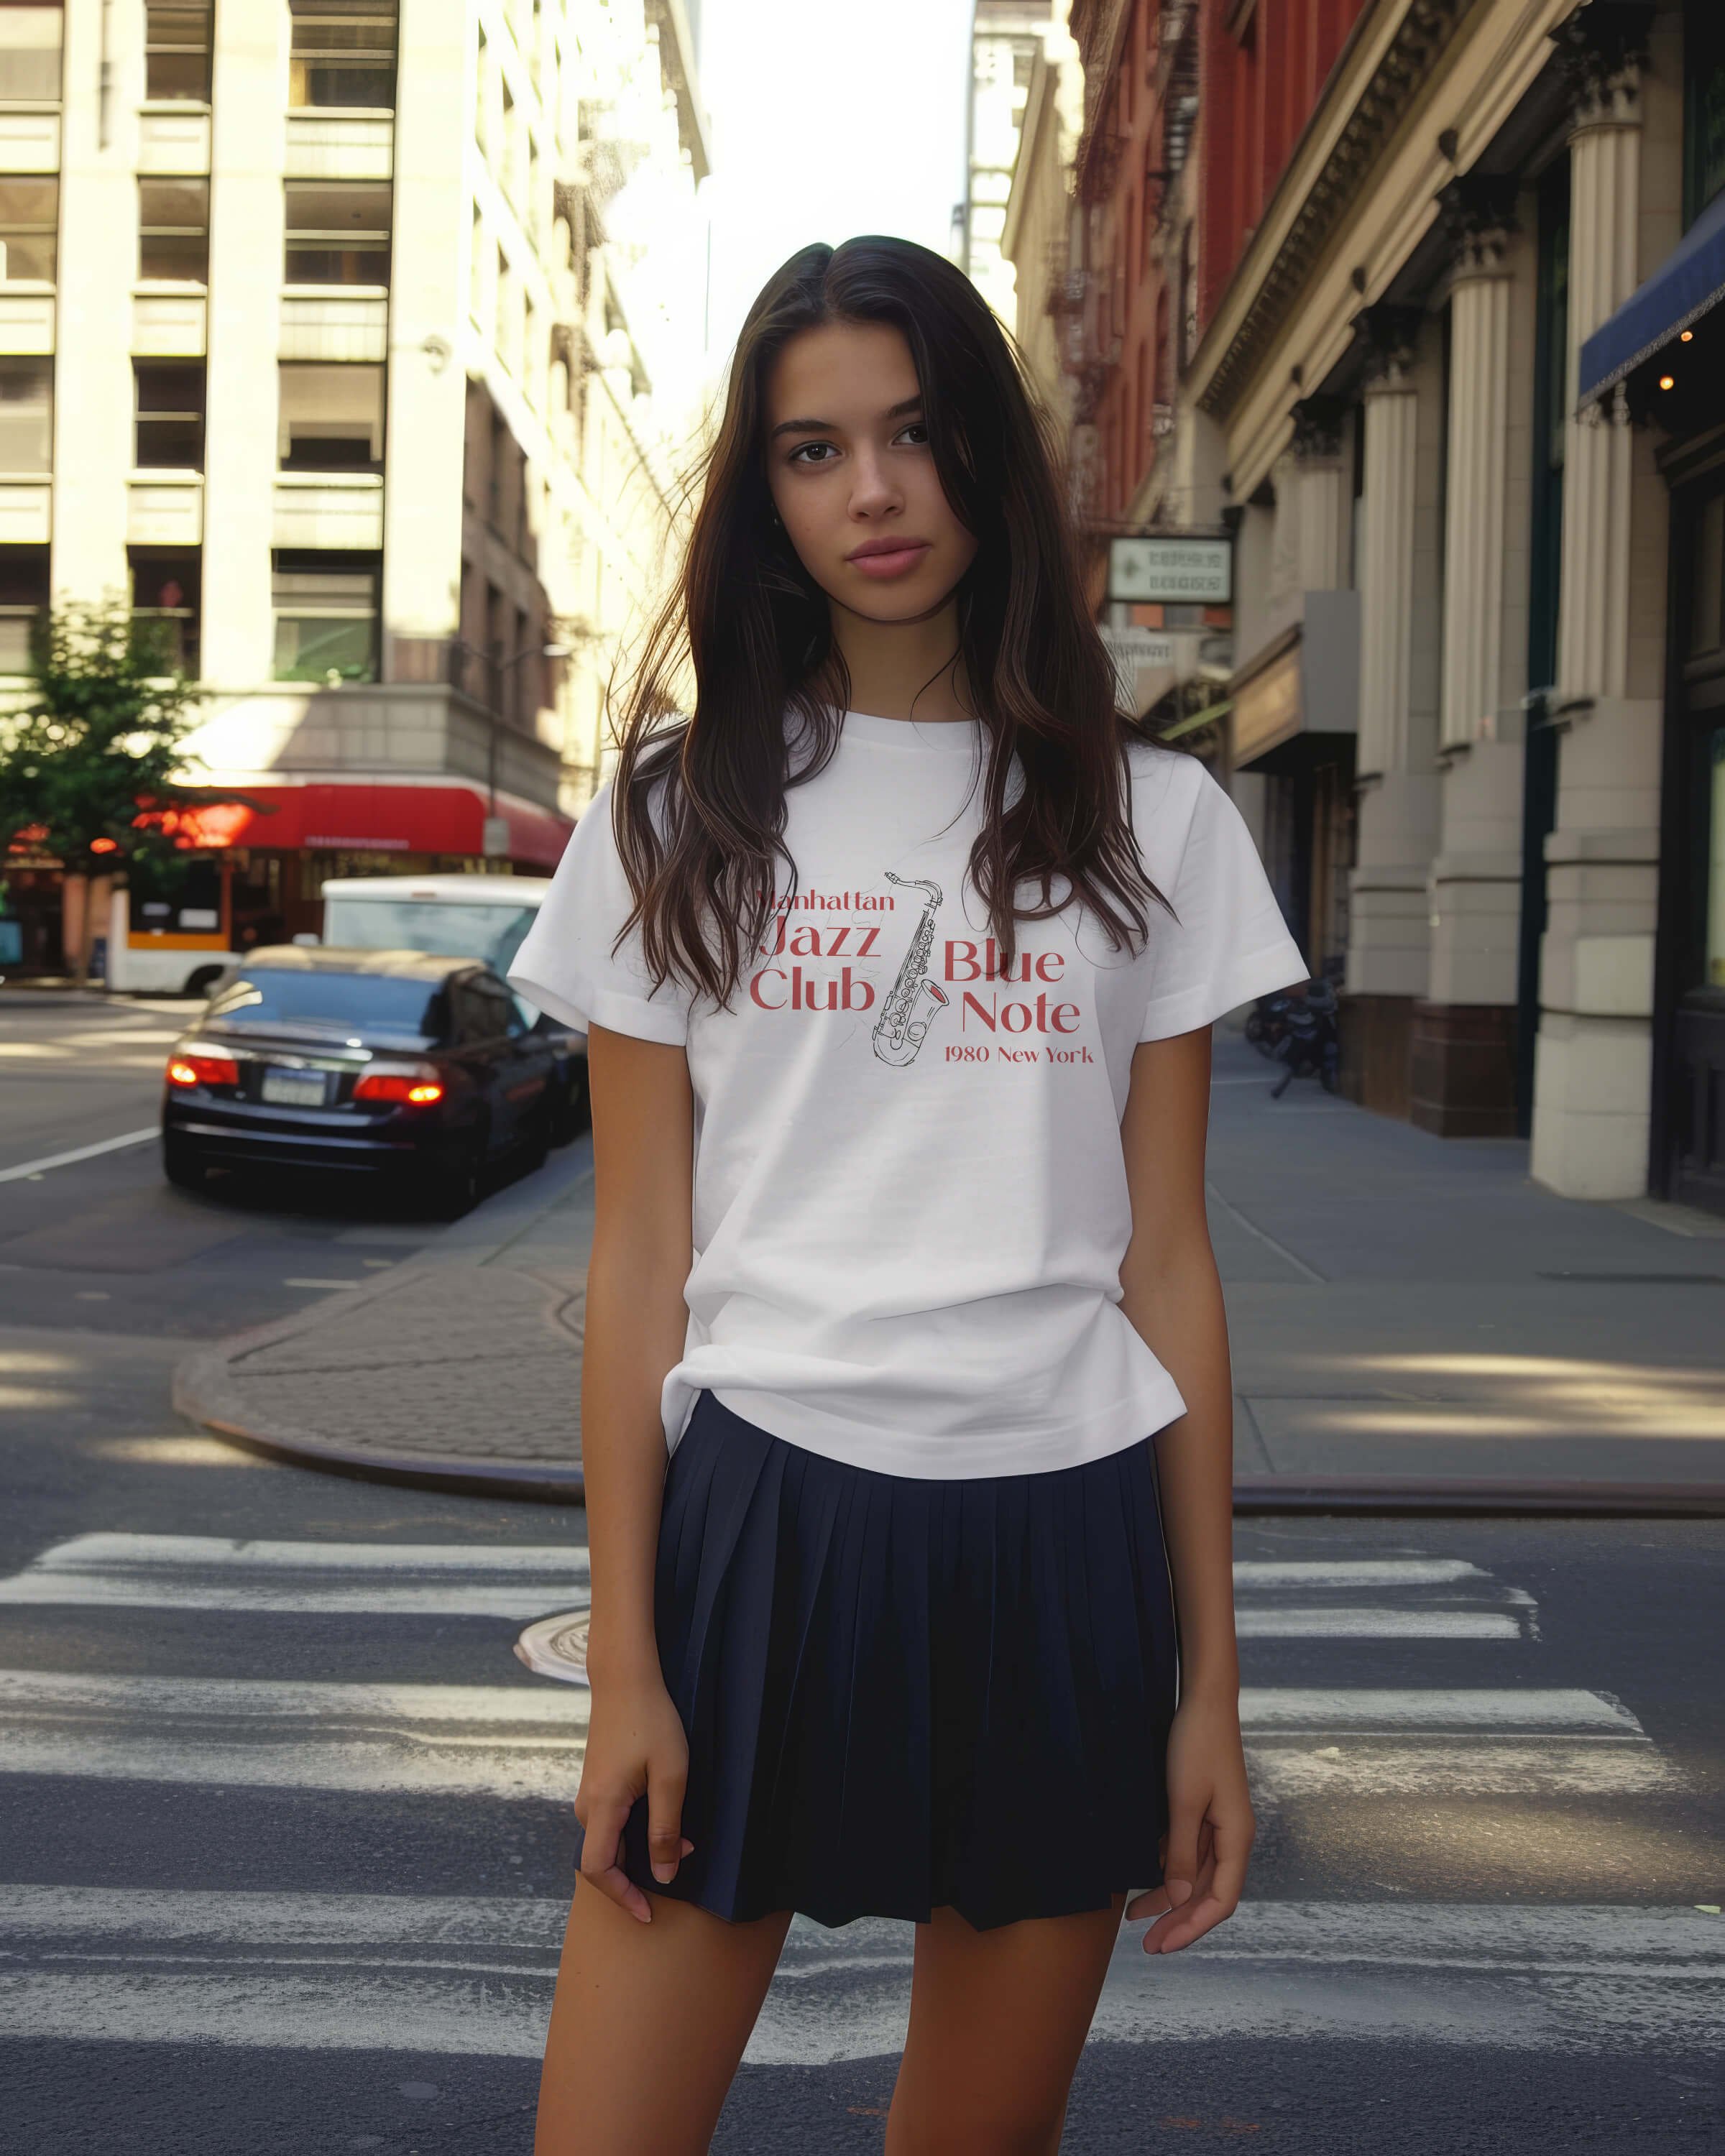 NYC-Girl.jpg